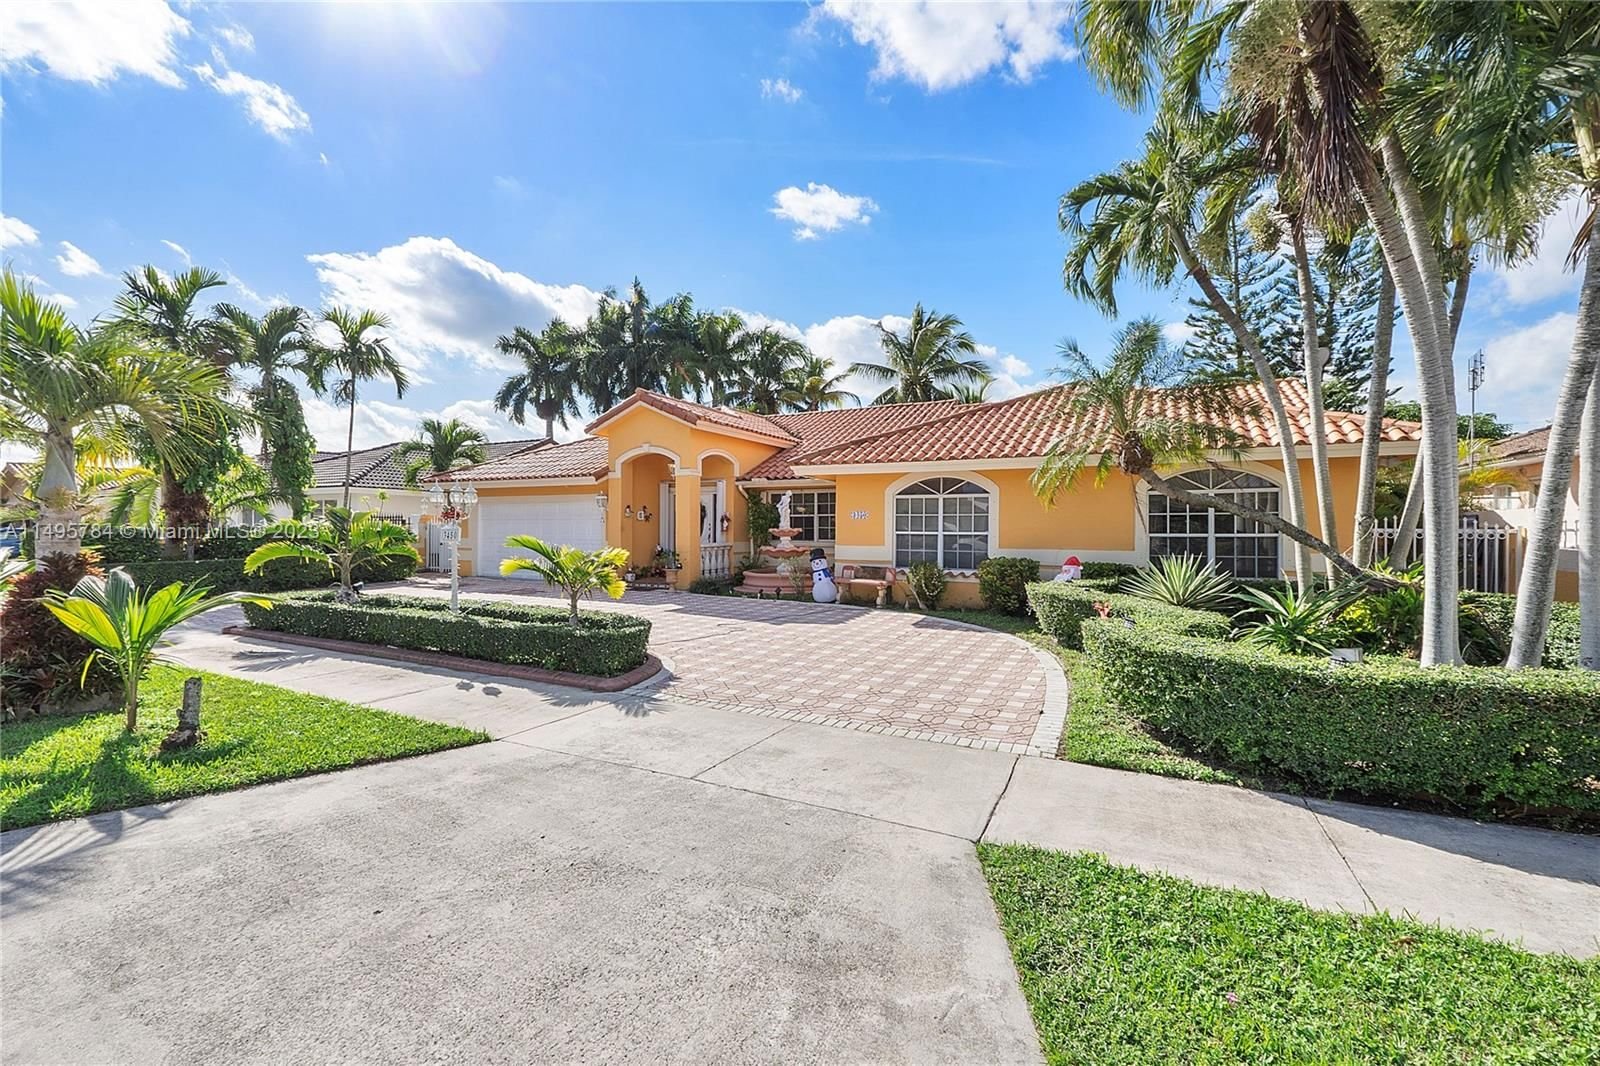 Real estate property located at 3450 143rd Pl, Miami-Dade County, P.I. ESTATES, Miami, FL